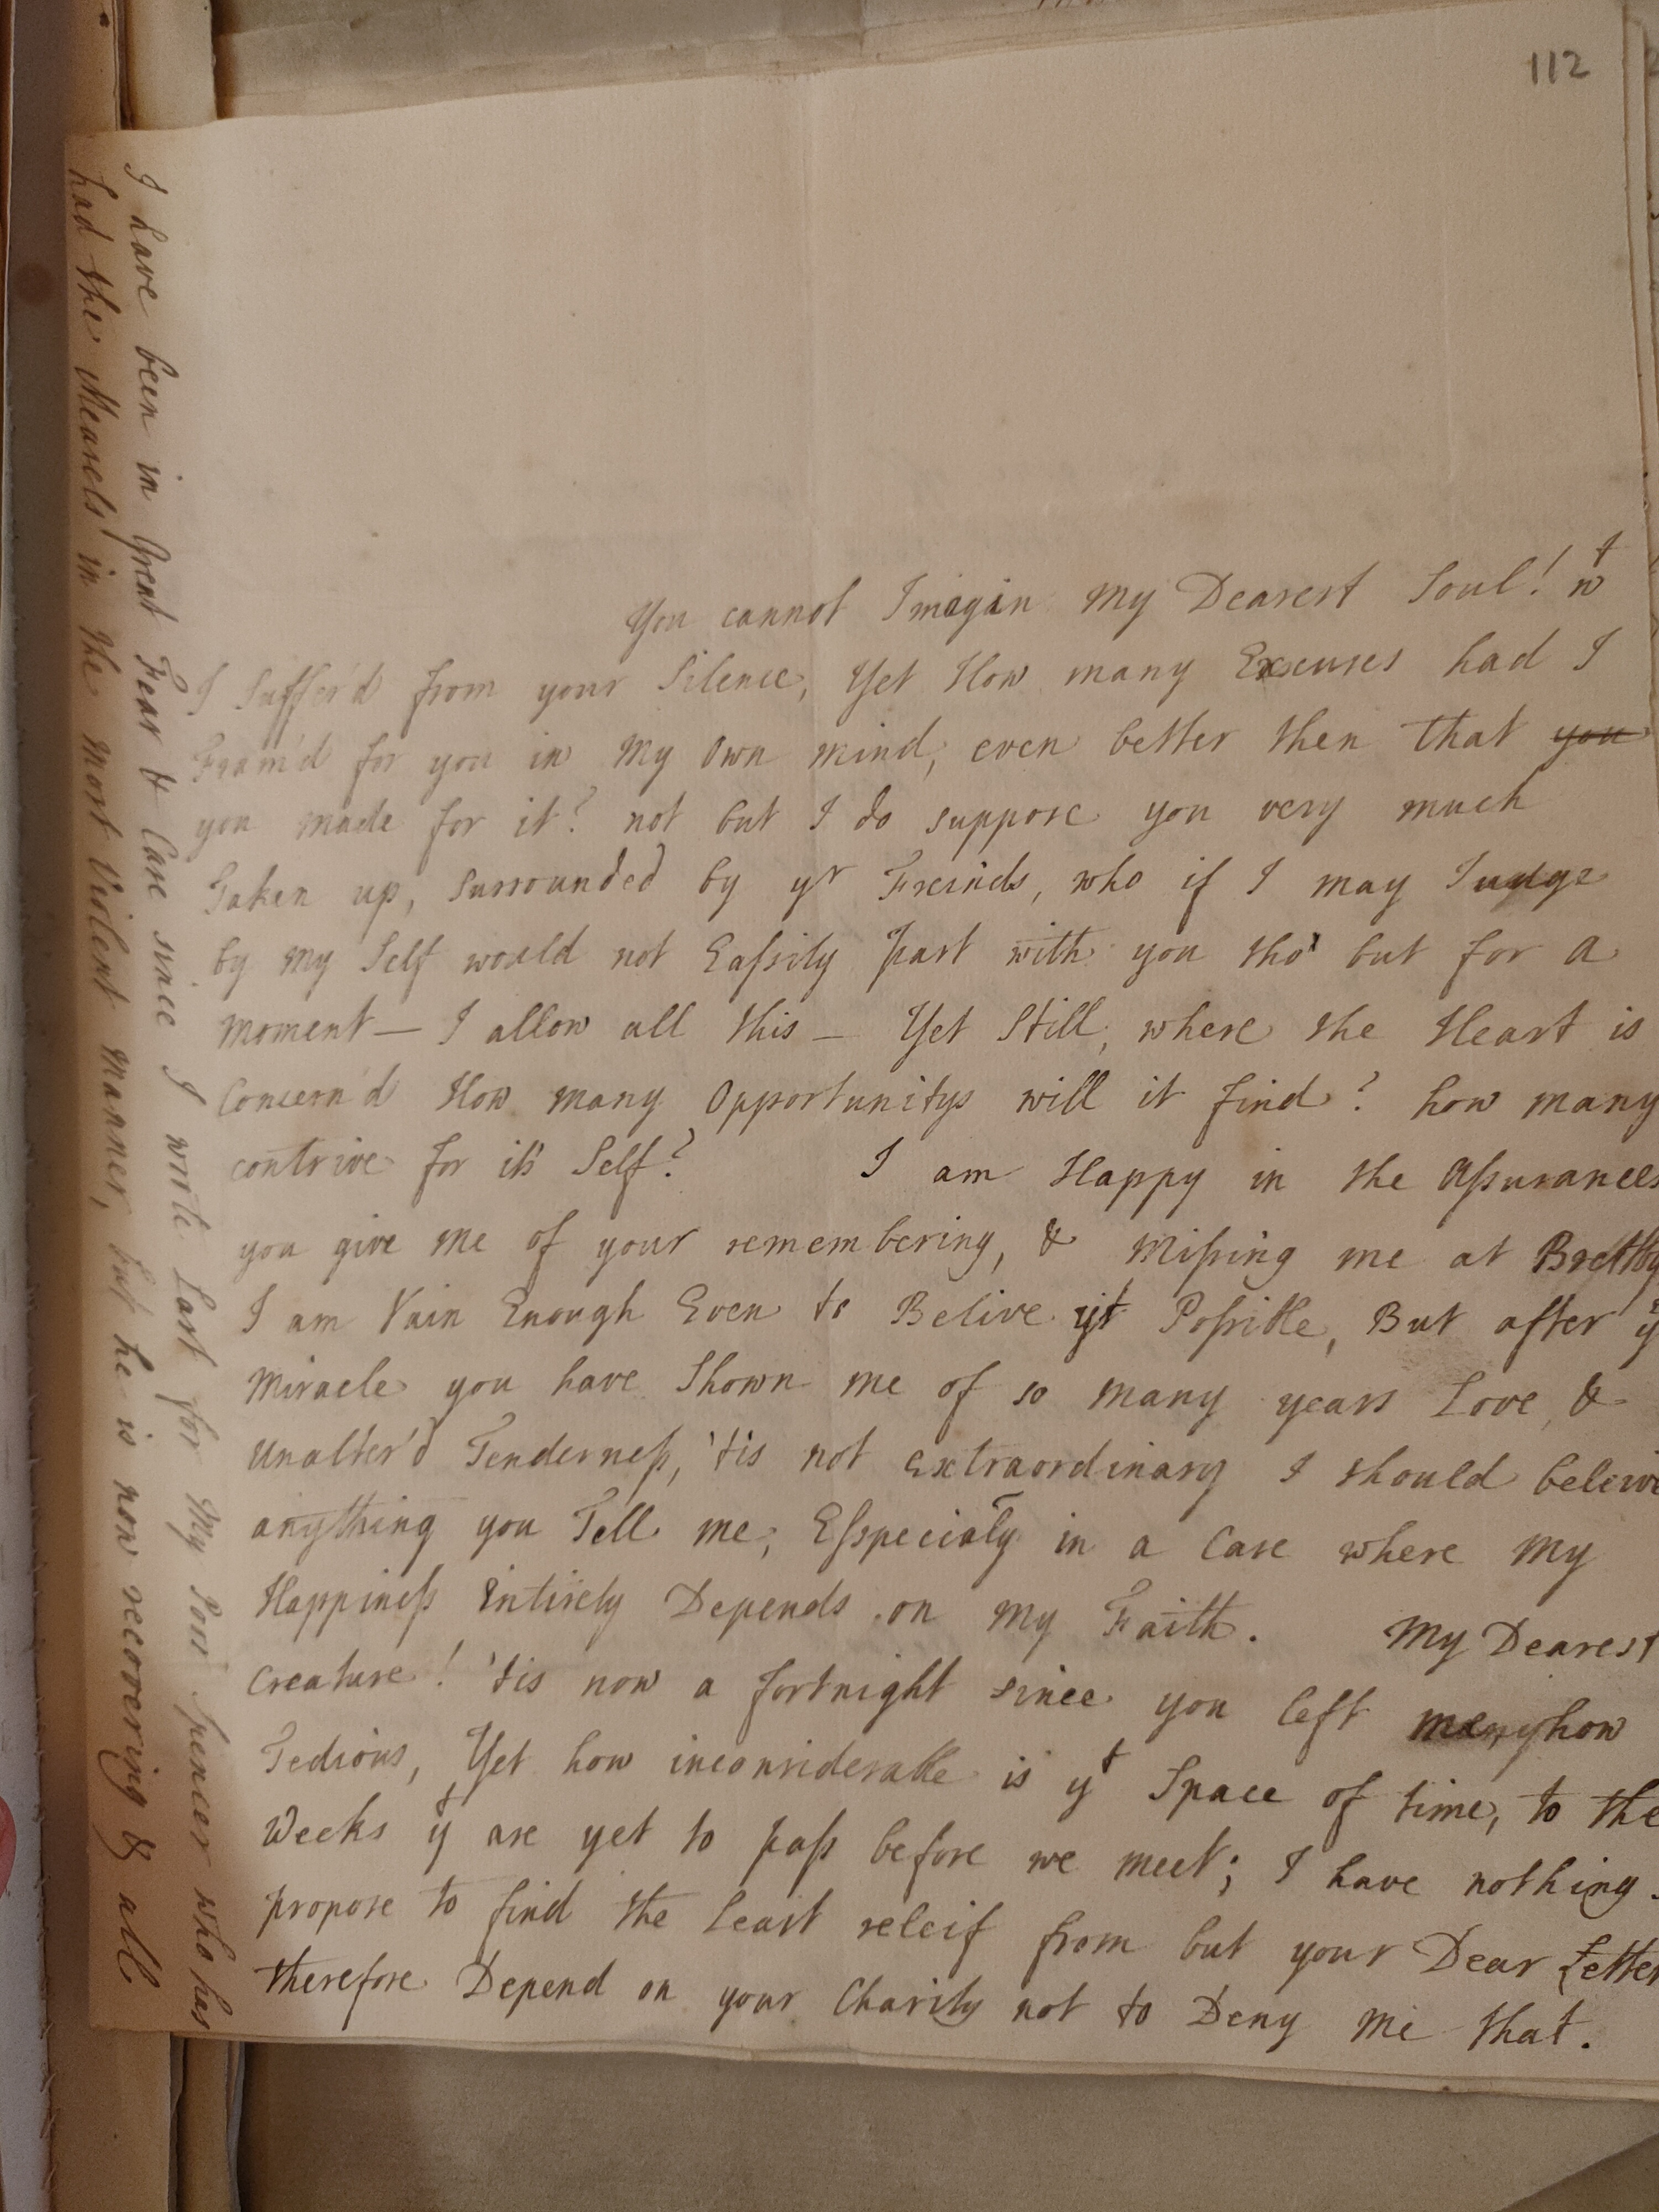 Image #1 of letter: Judith Madan to Martin Madan, 20 August 1730